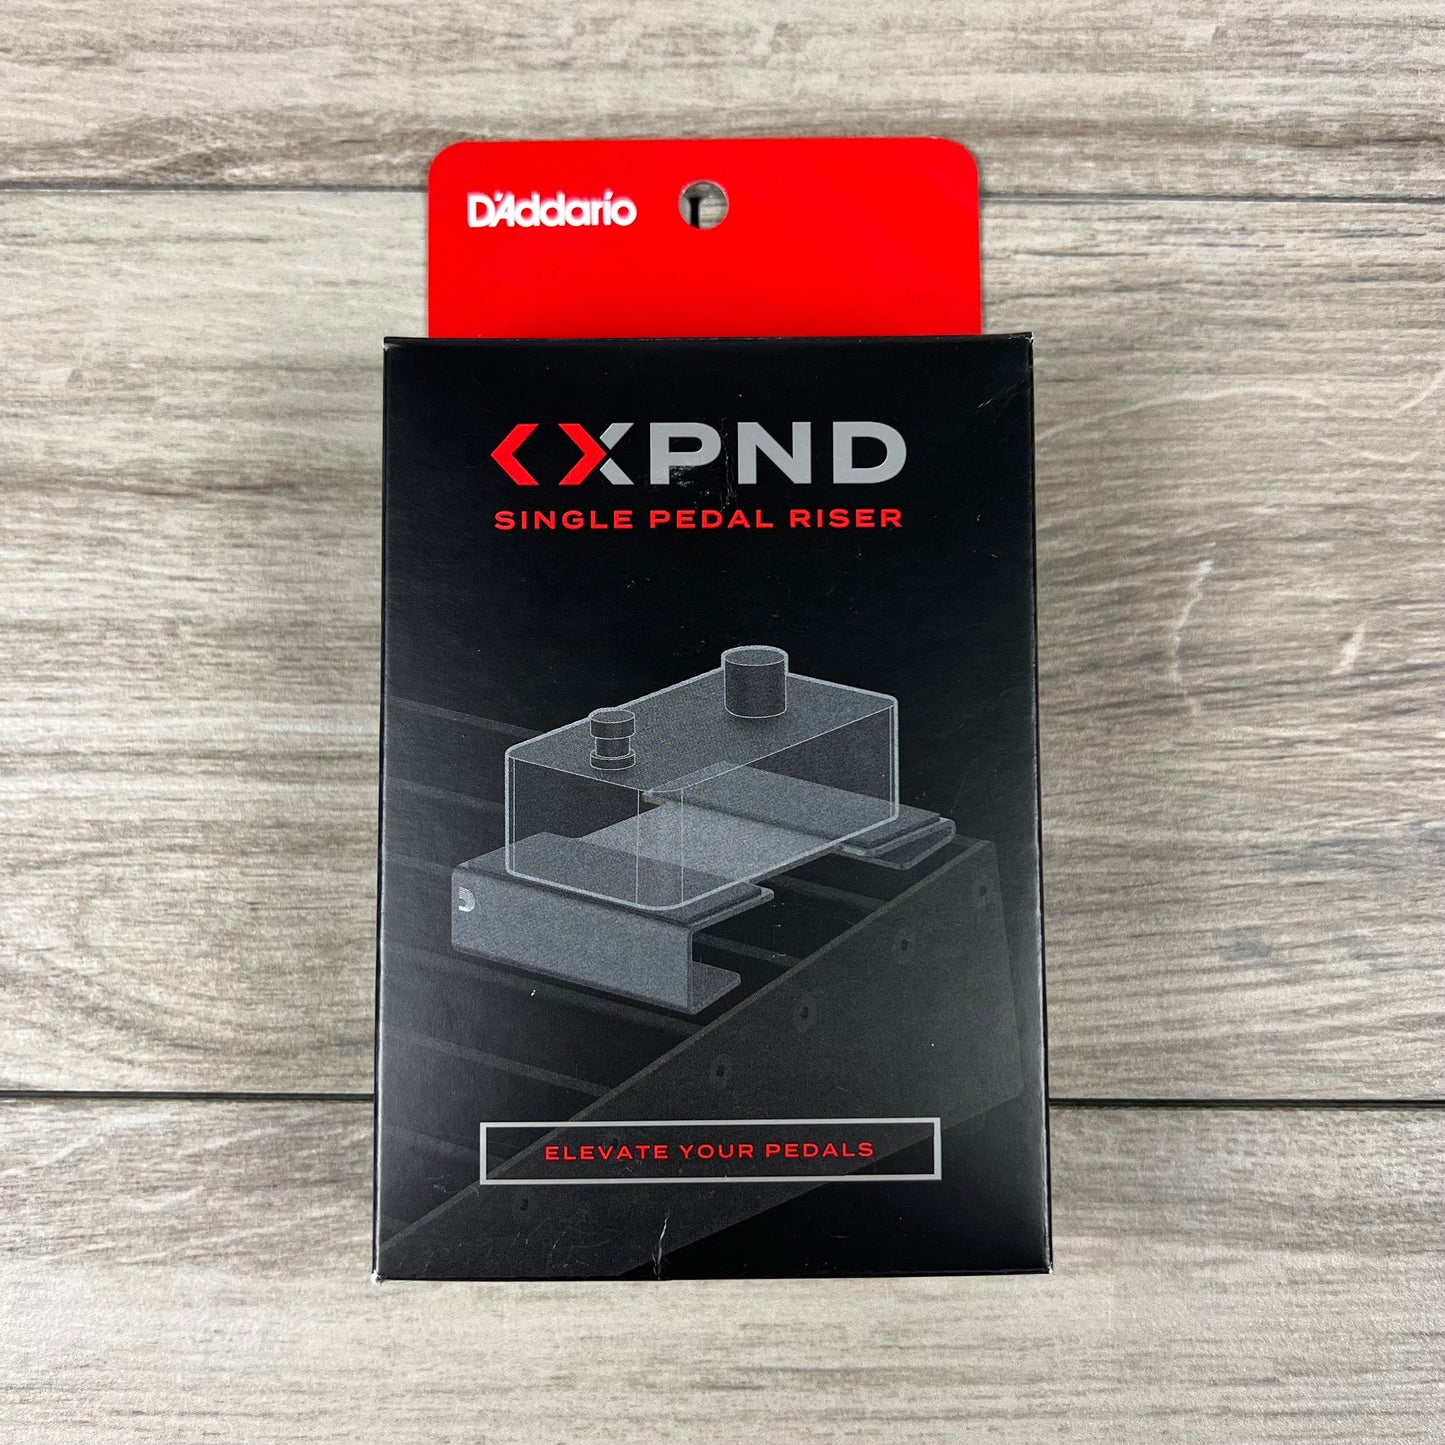 D'Addario XPND Single Pedal Riser